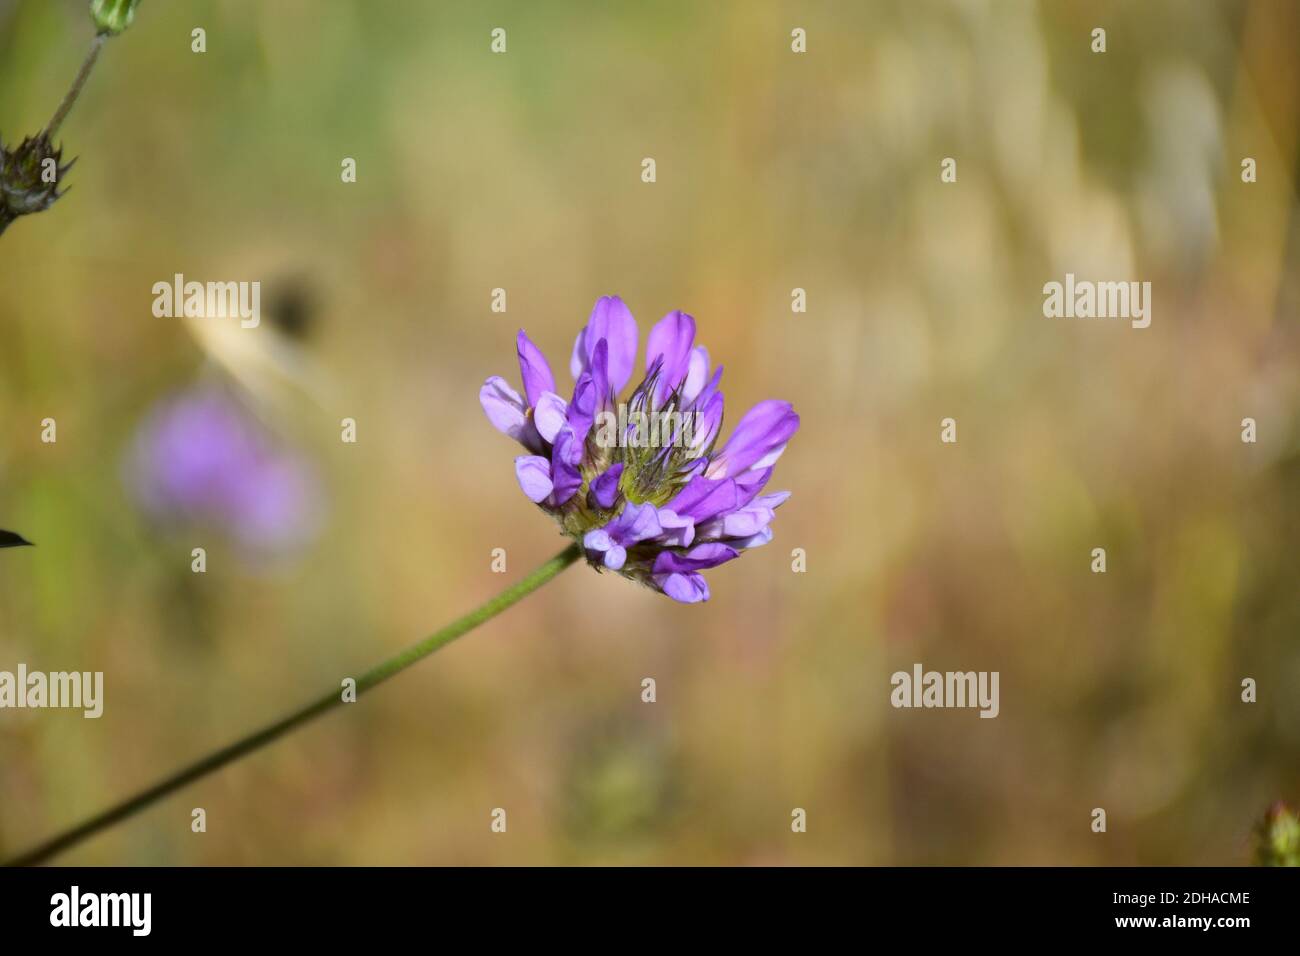 Stinkende Kleeblatt (Bituminaria bituminous) Blume, blau-violette Blütenkrone. Stockfoto